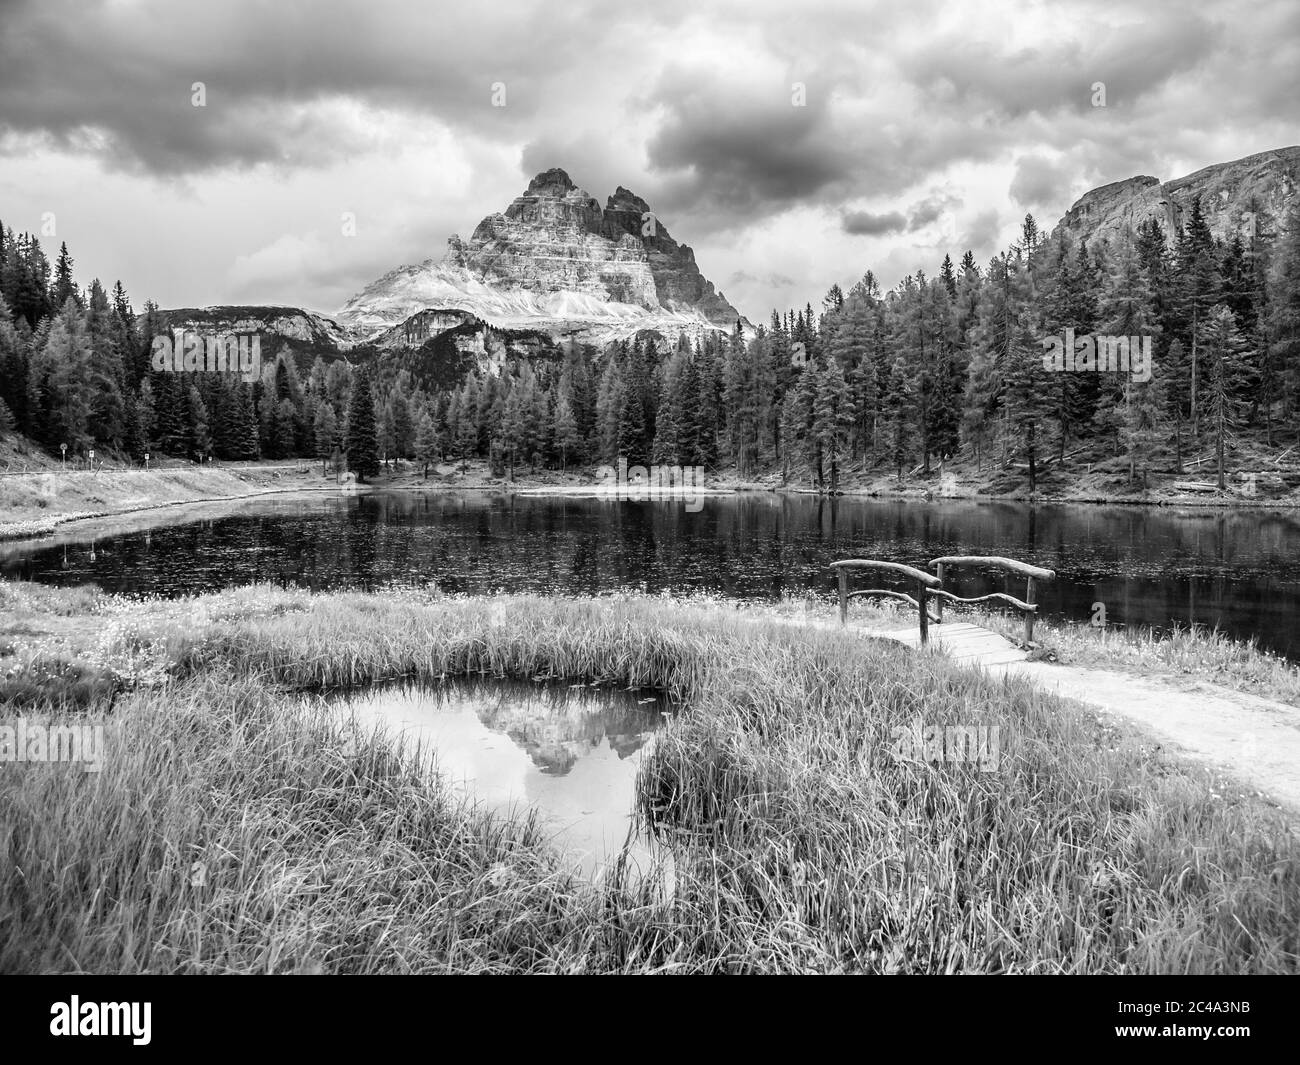 Tre Cime di Lavaredo Mountain reflected in water od Antorno Lake, Dolomites, Italy. Black and white image. Stock Photo